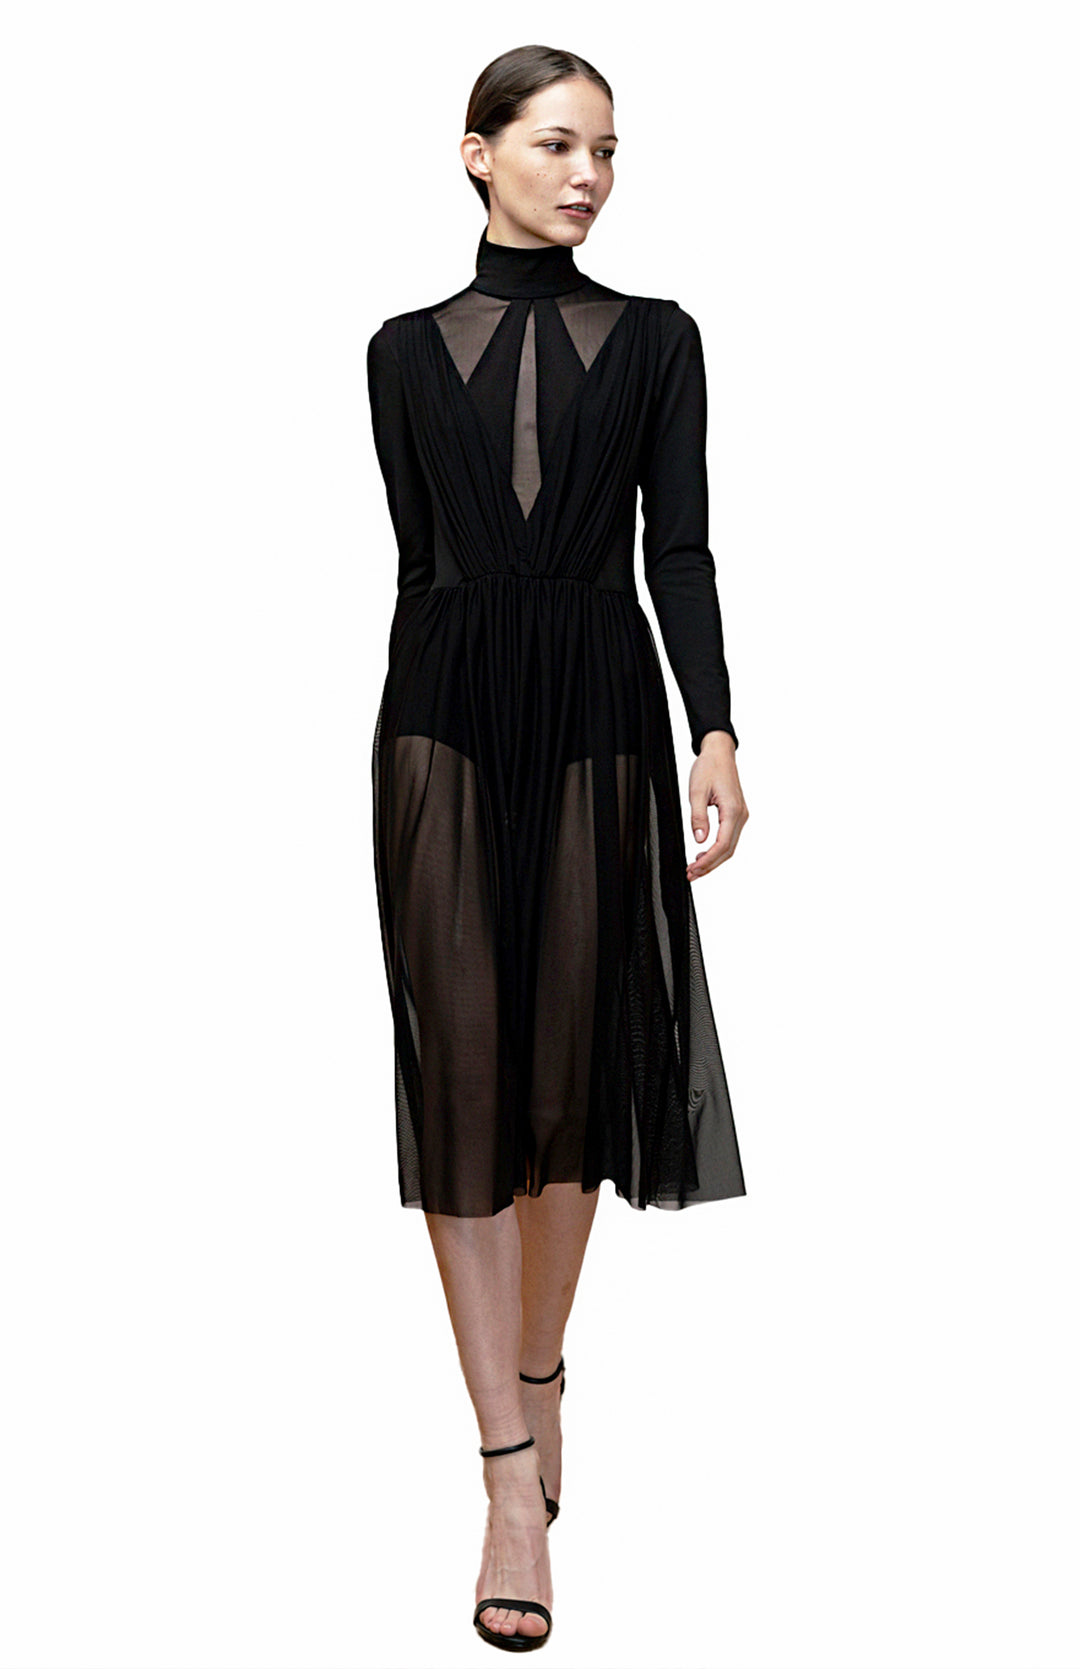 Black Sheer Dress, Turtleneck Bodysuit